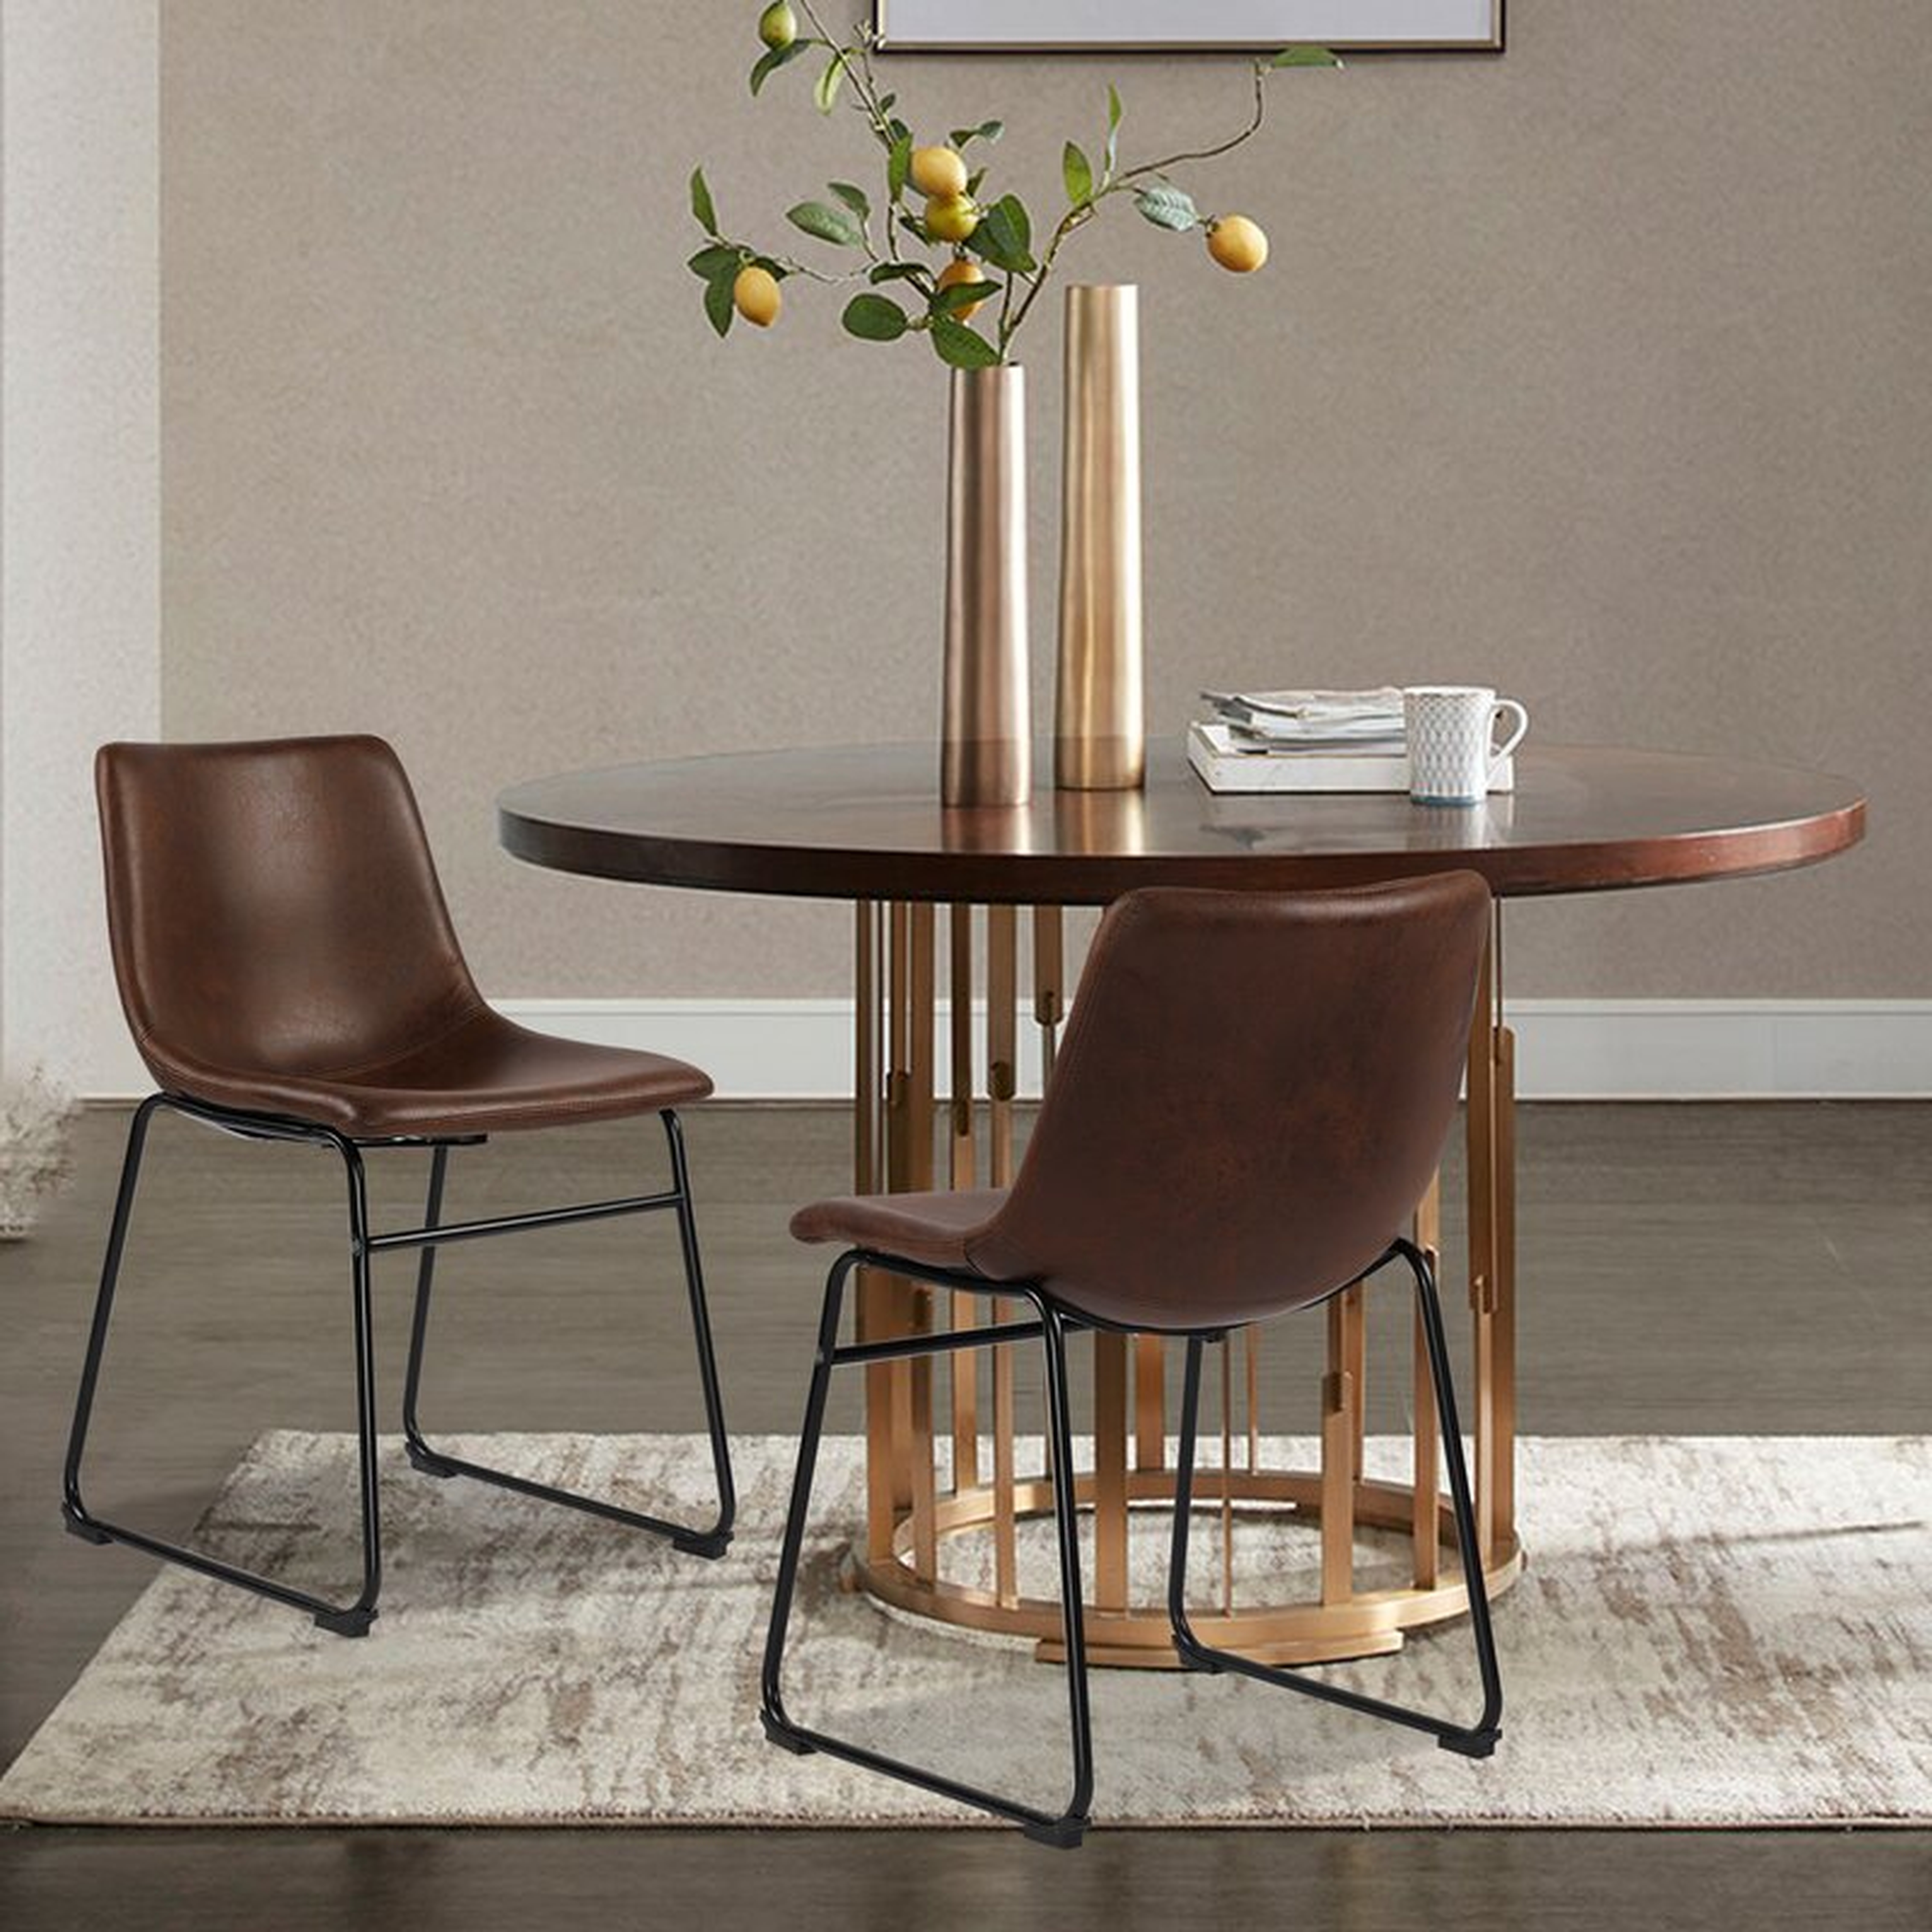 Behan Upholstered Dining Chair - Wayfair